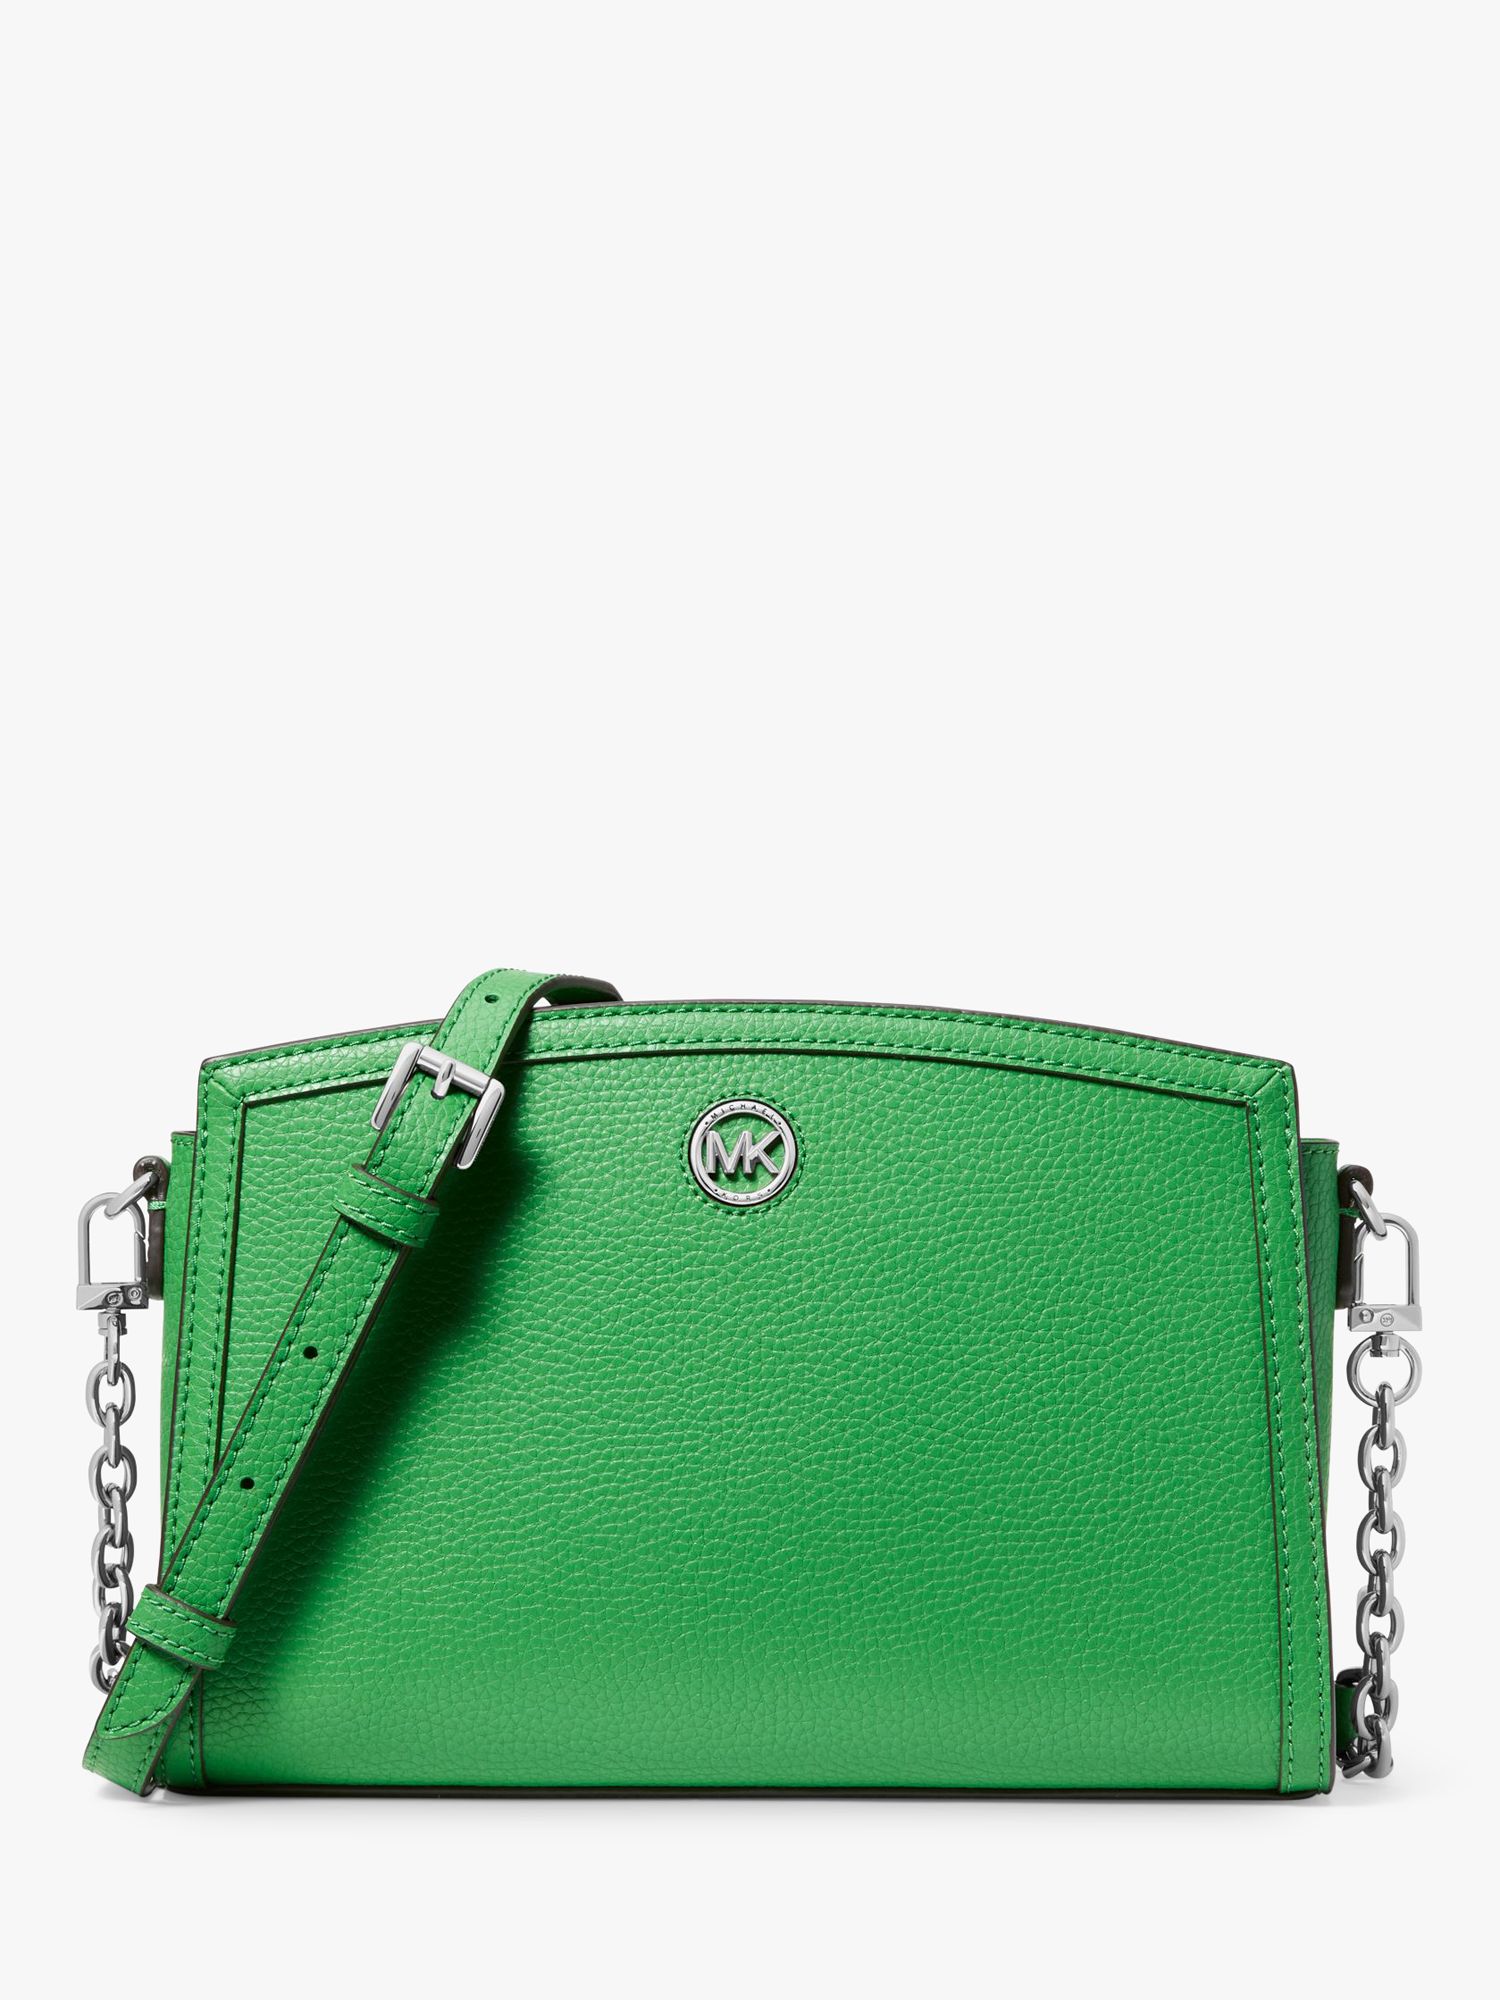 Women's Green Michael Kors Handbags, Bags & Purses | John Lewis & Partners